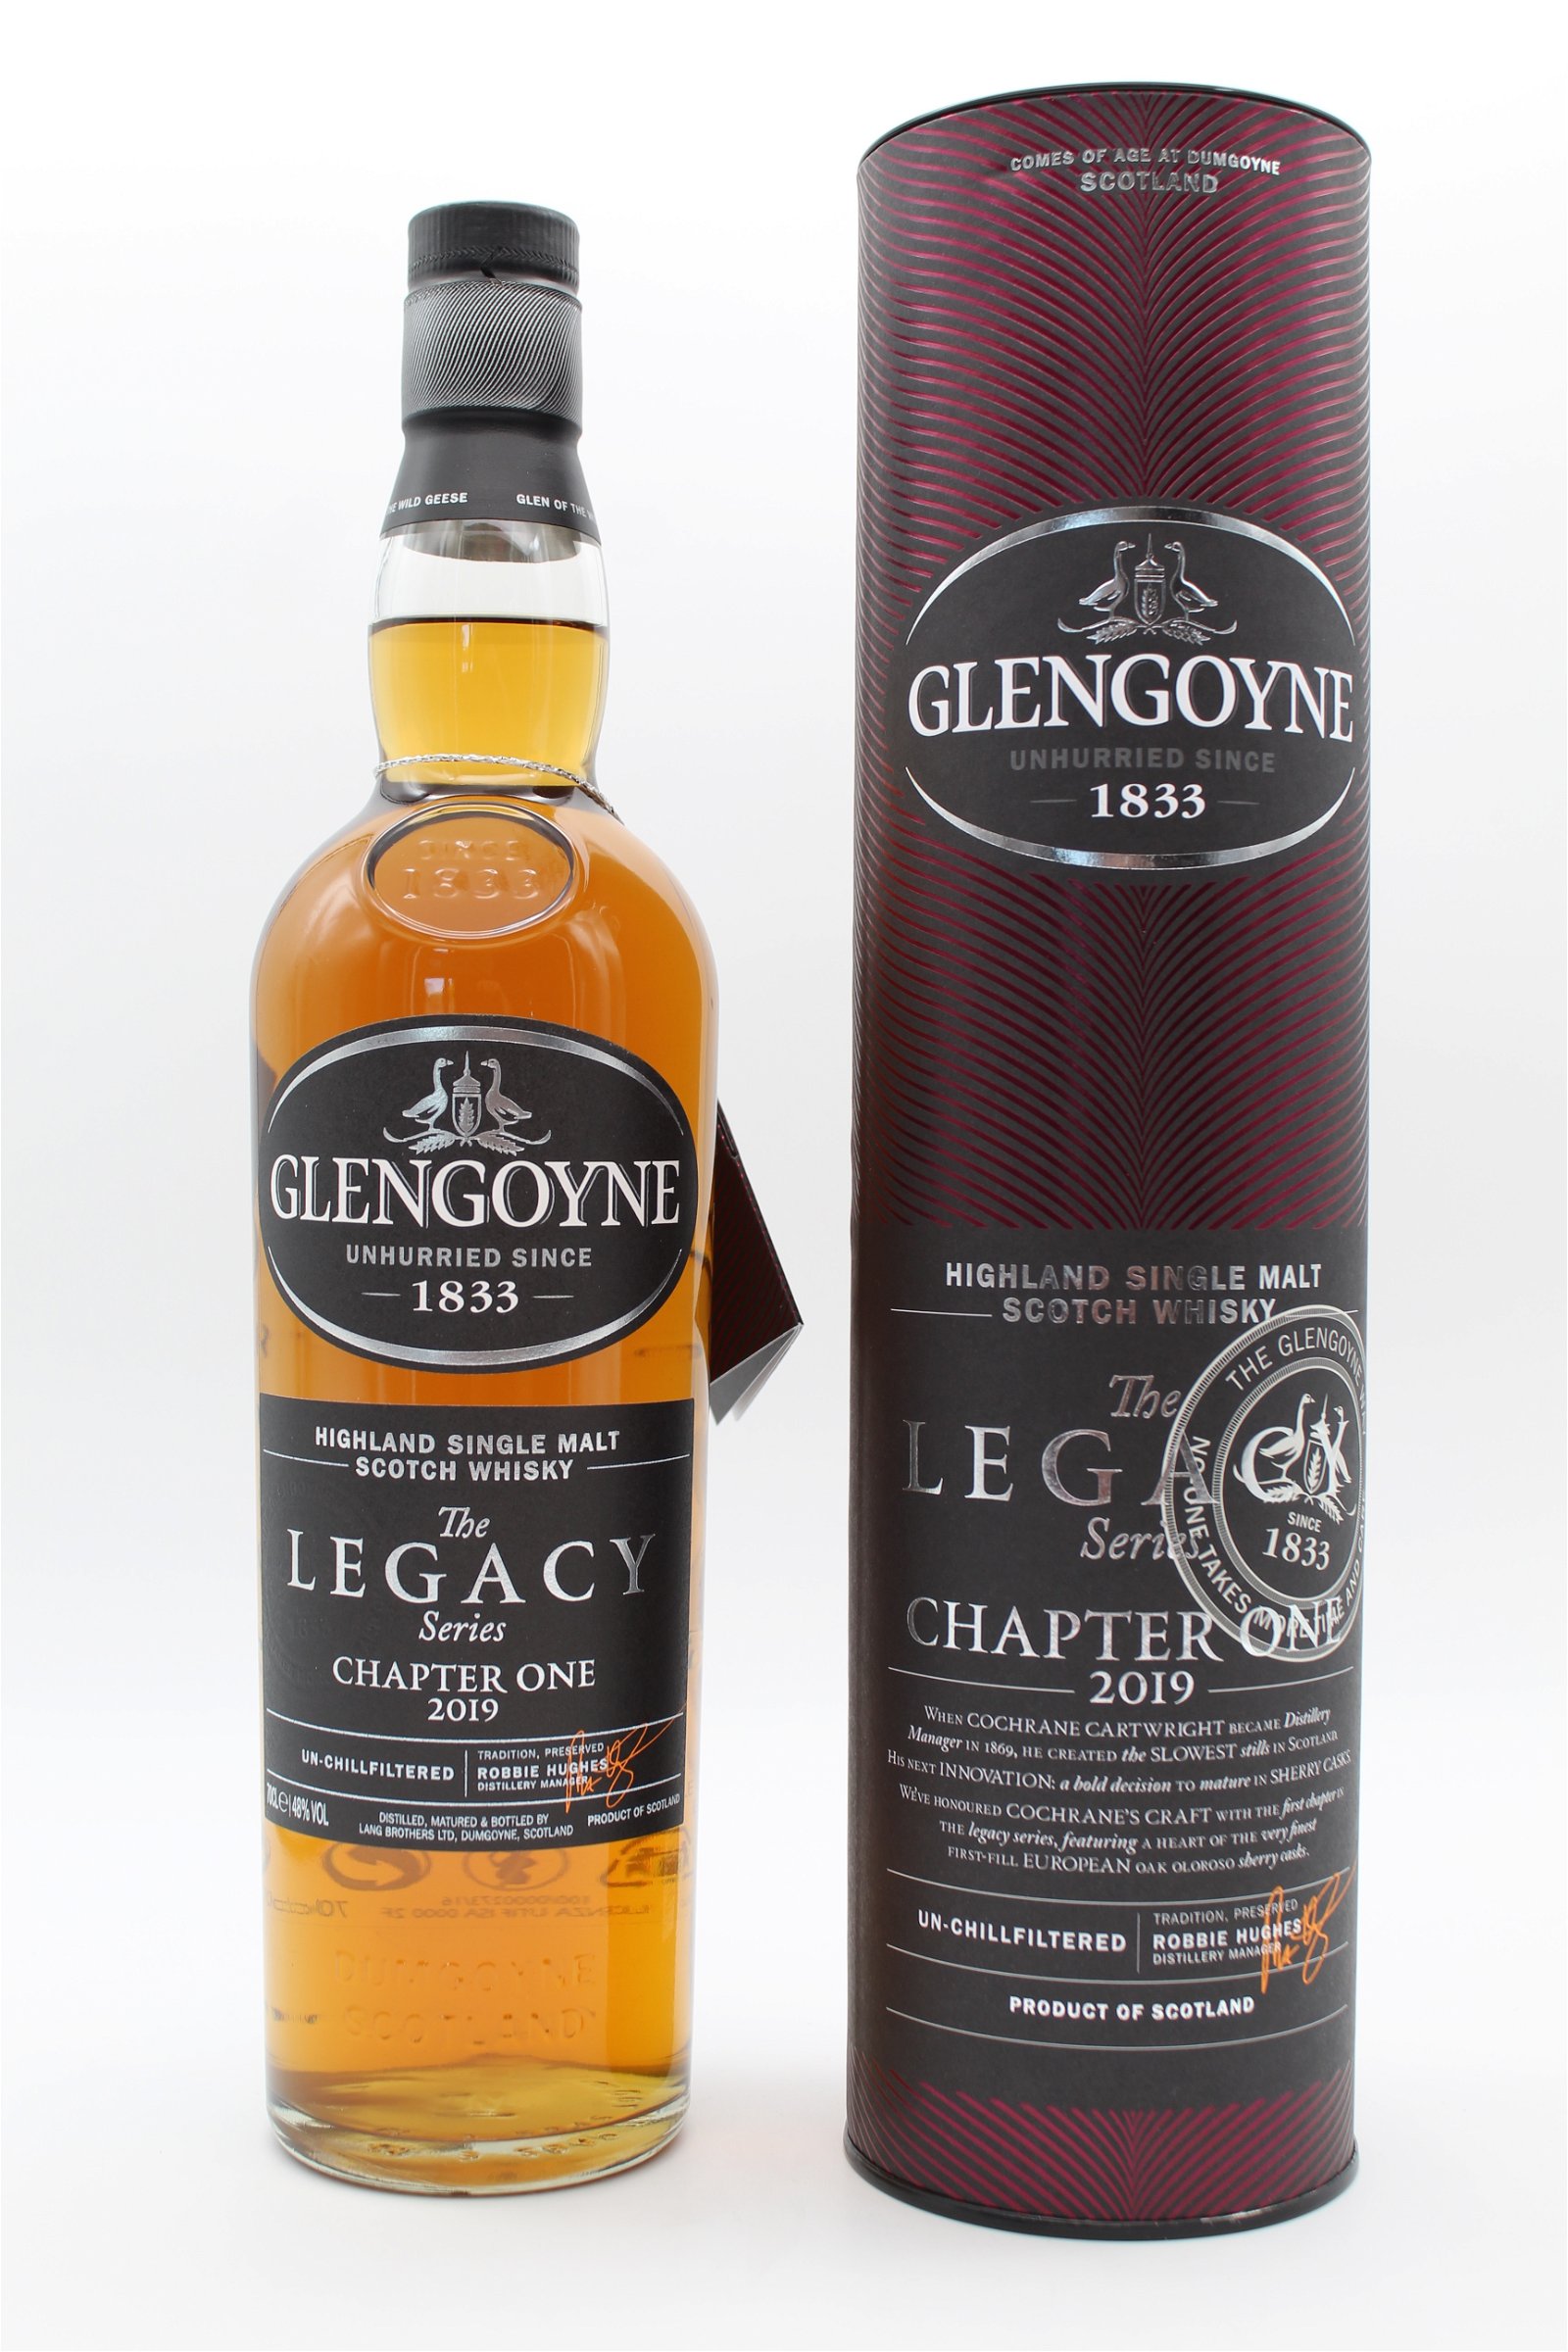 Glengoyne The Legacy Series Chapter One Single Malt Scotch Whisky